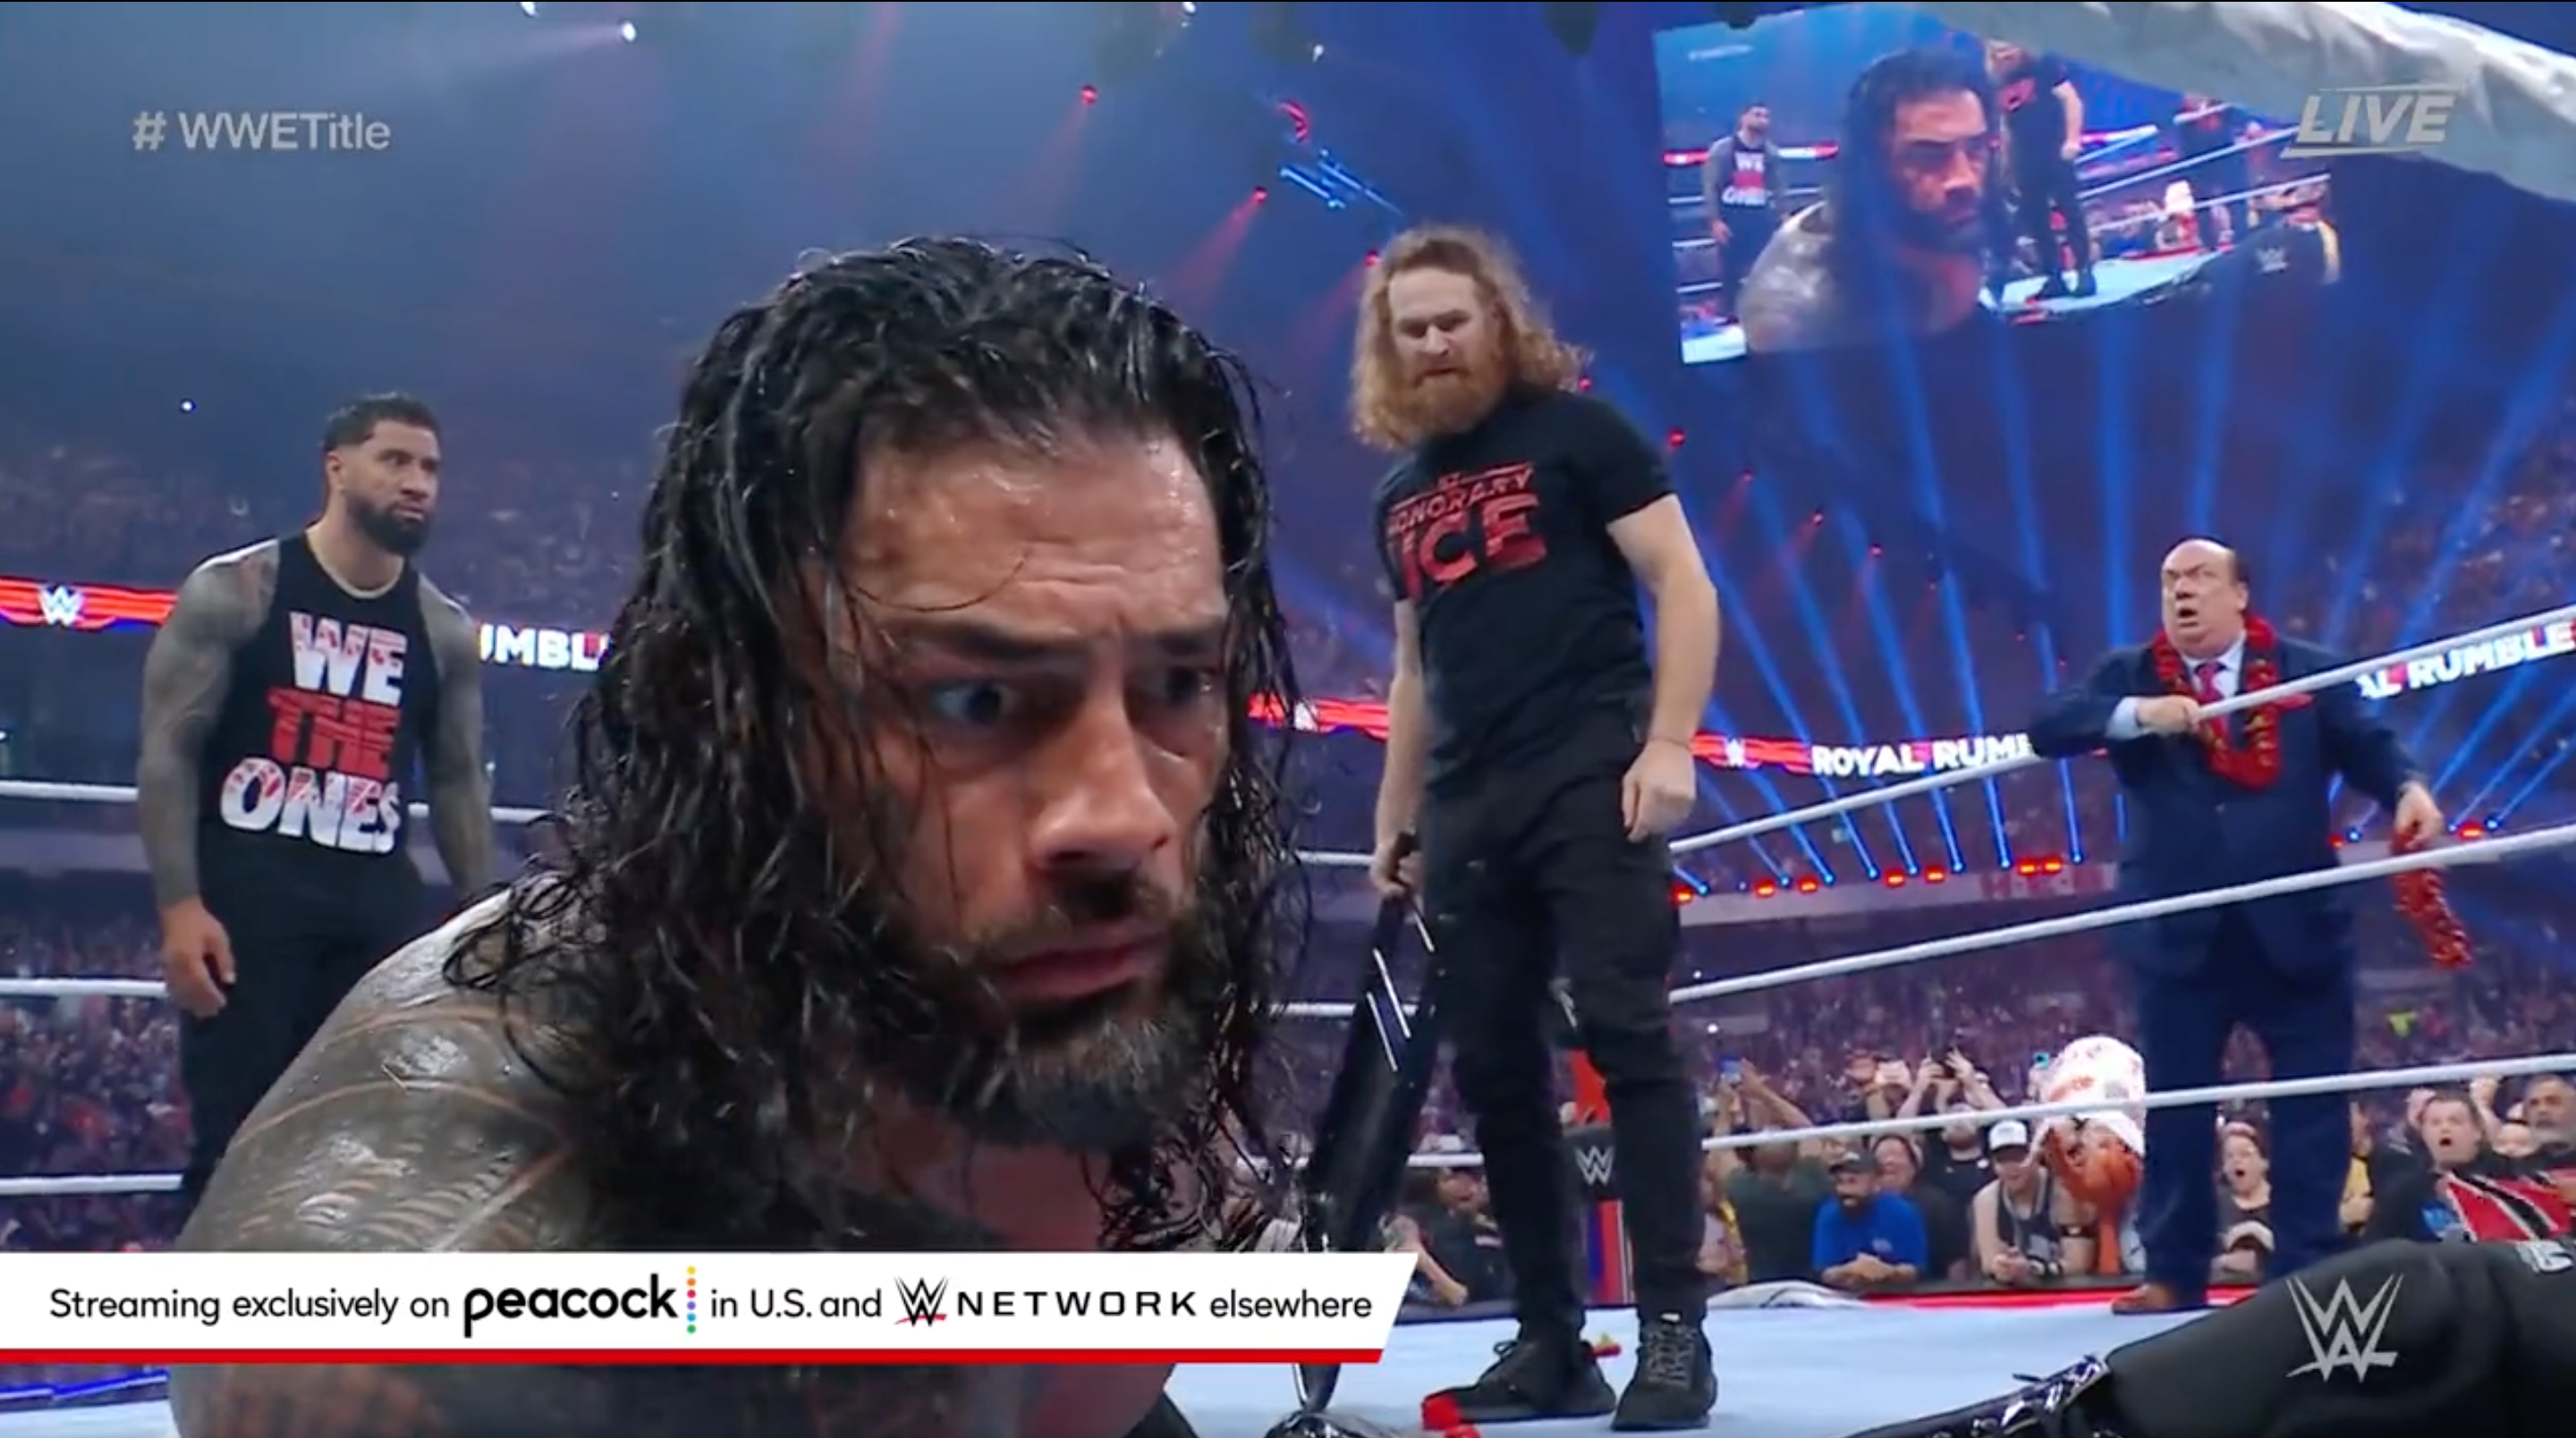 Roman Reigns stunned by Sami Zayn's chair shot